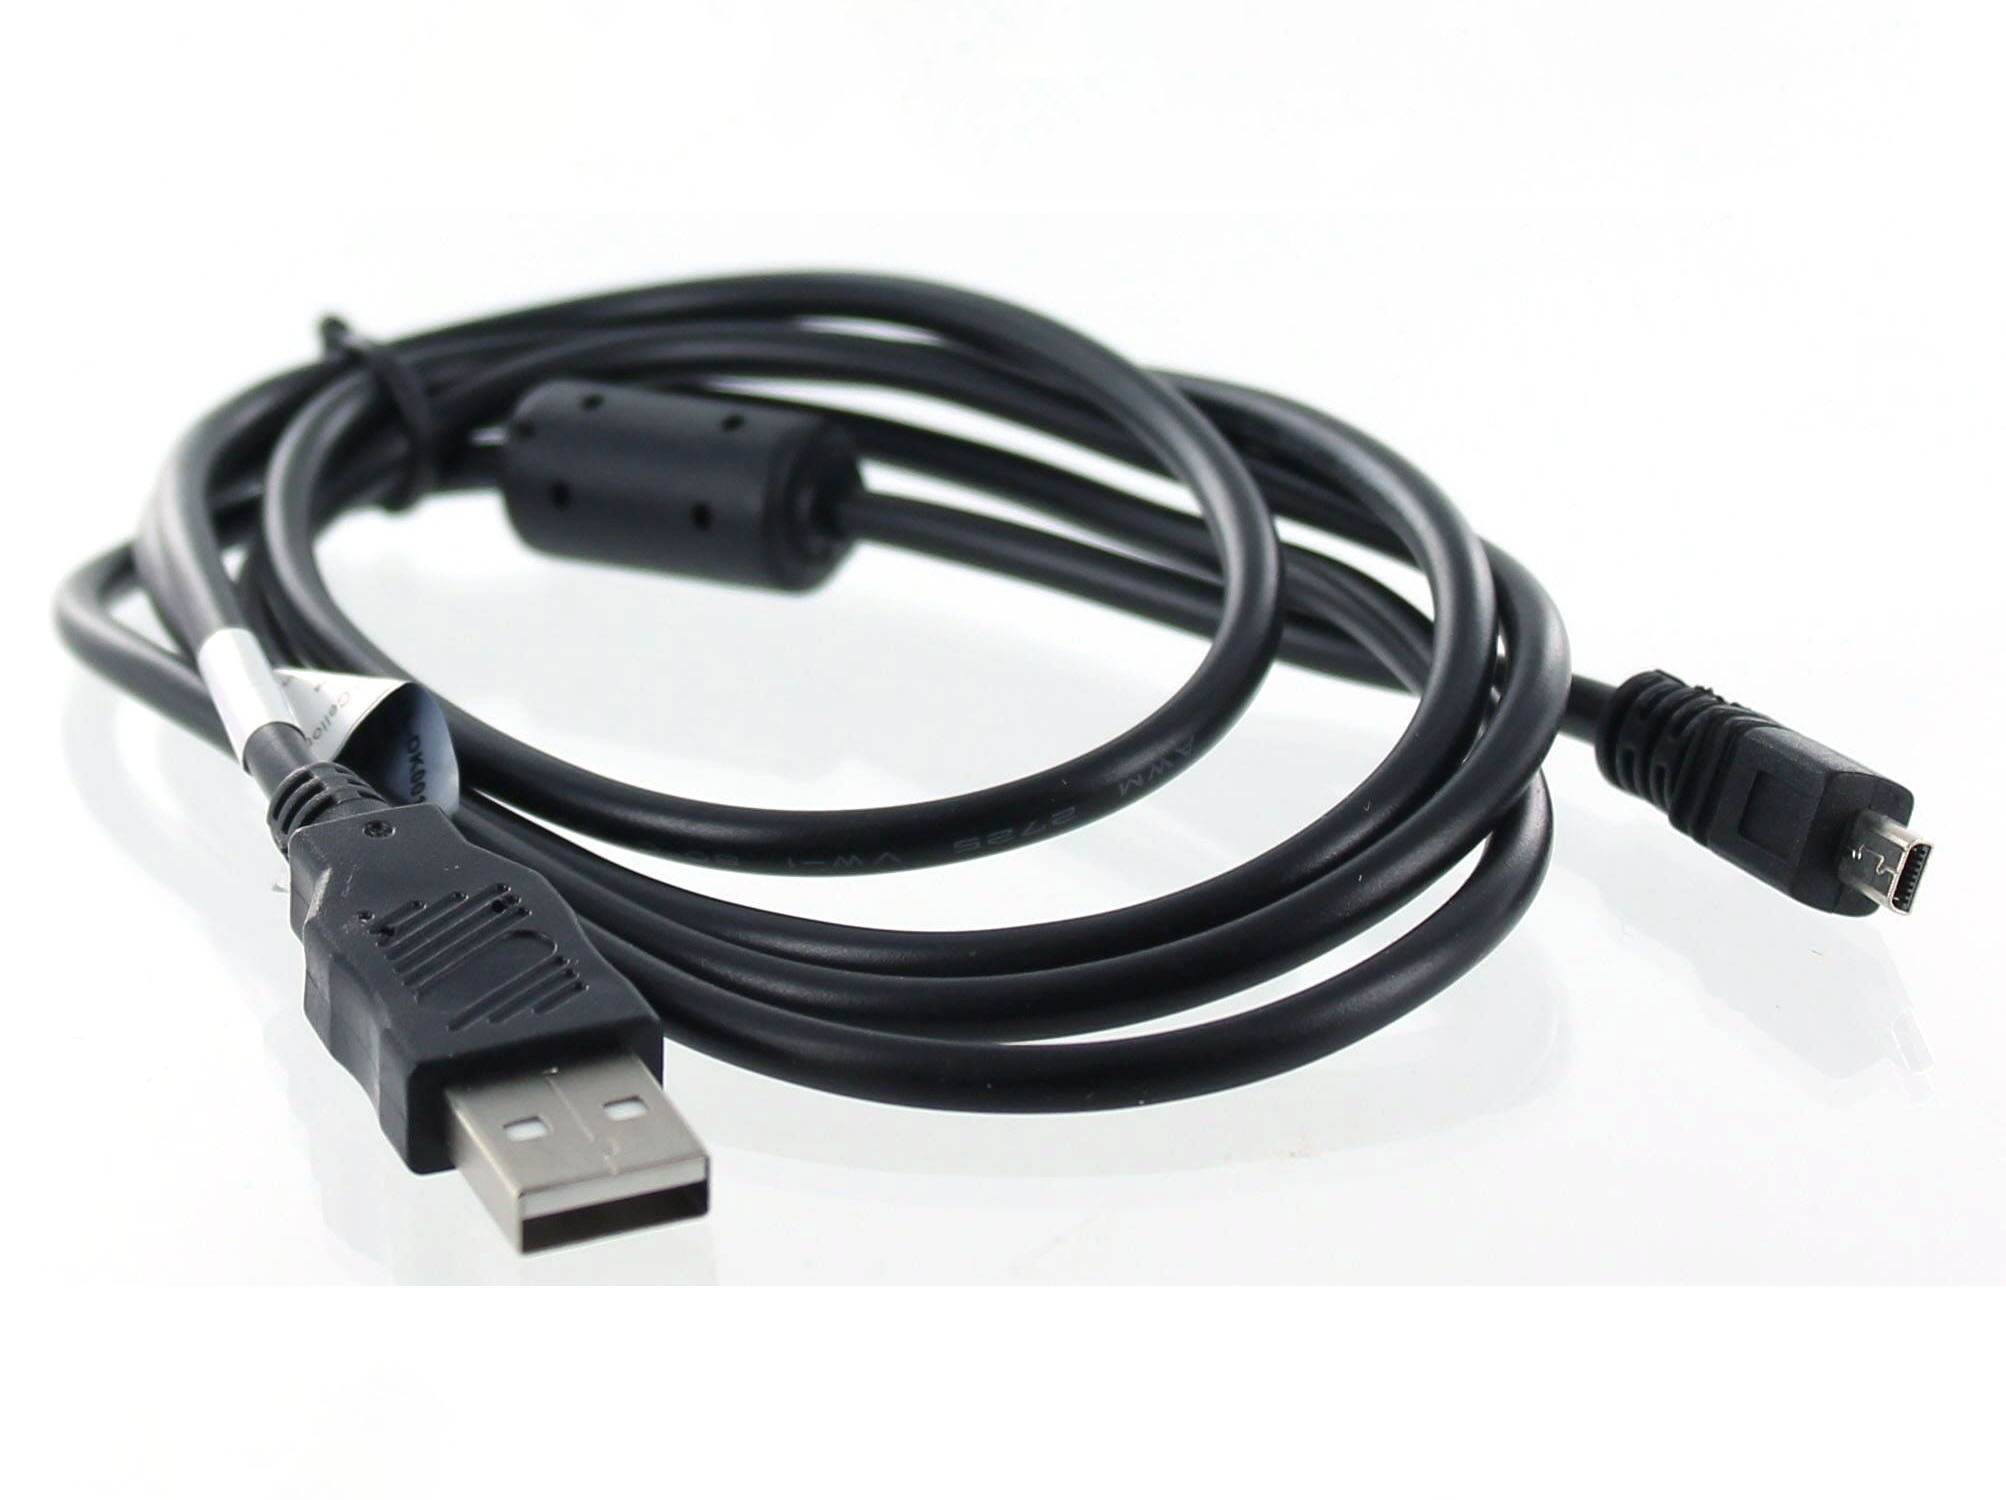 MOBILOTEC USB-Datenkabel DMC-SZ9 Zubehör mit Lumix schwarz Panasonic, Panasonic kompatibel